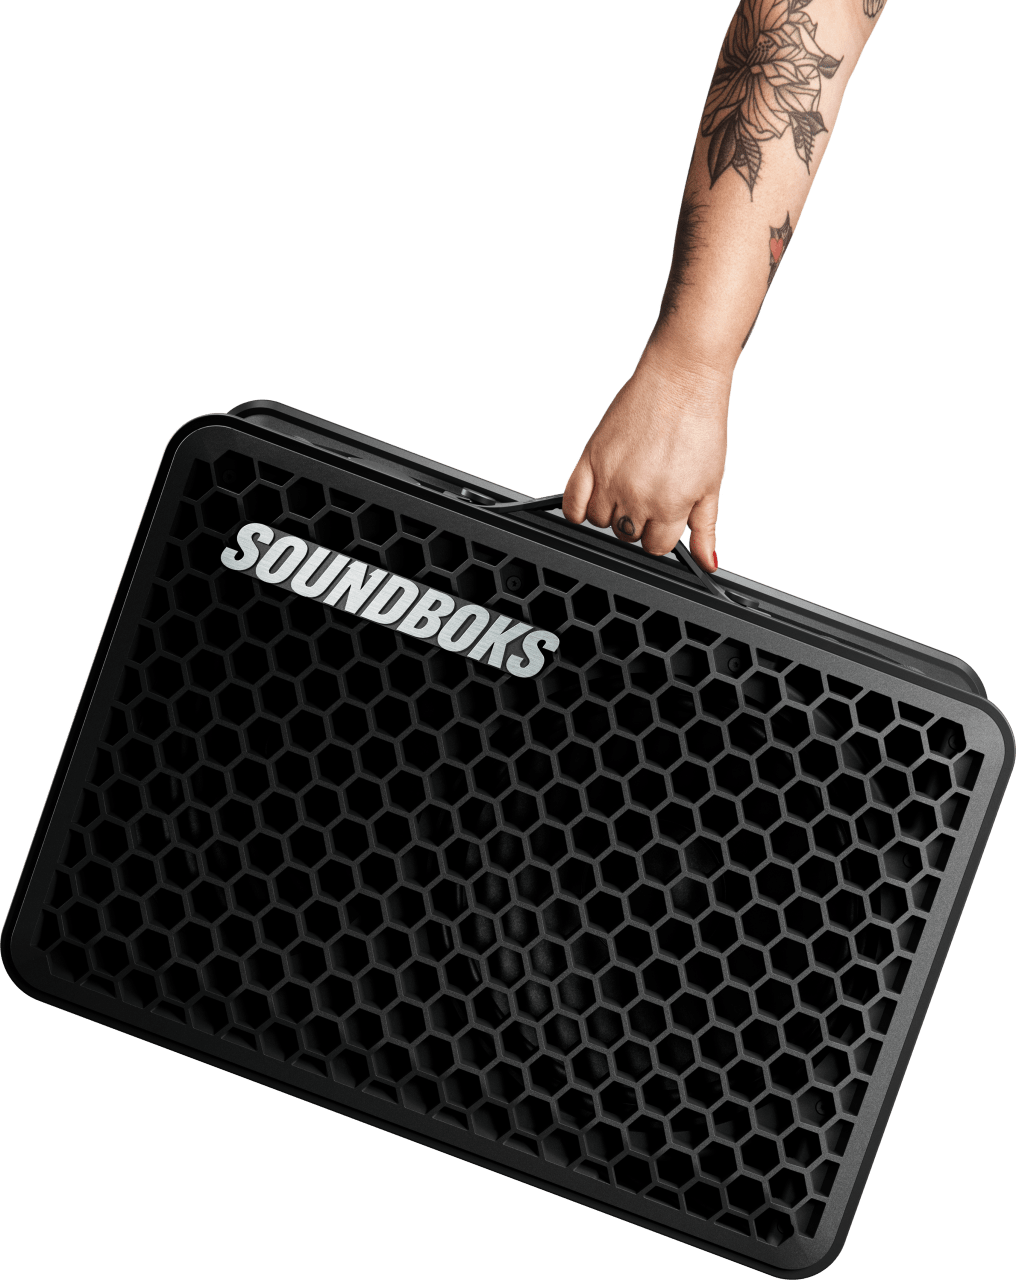 Black Soundboks Go Bluetooth Speaker.5